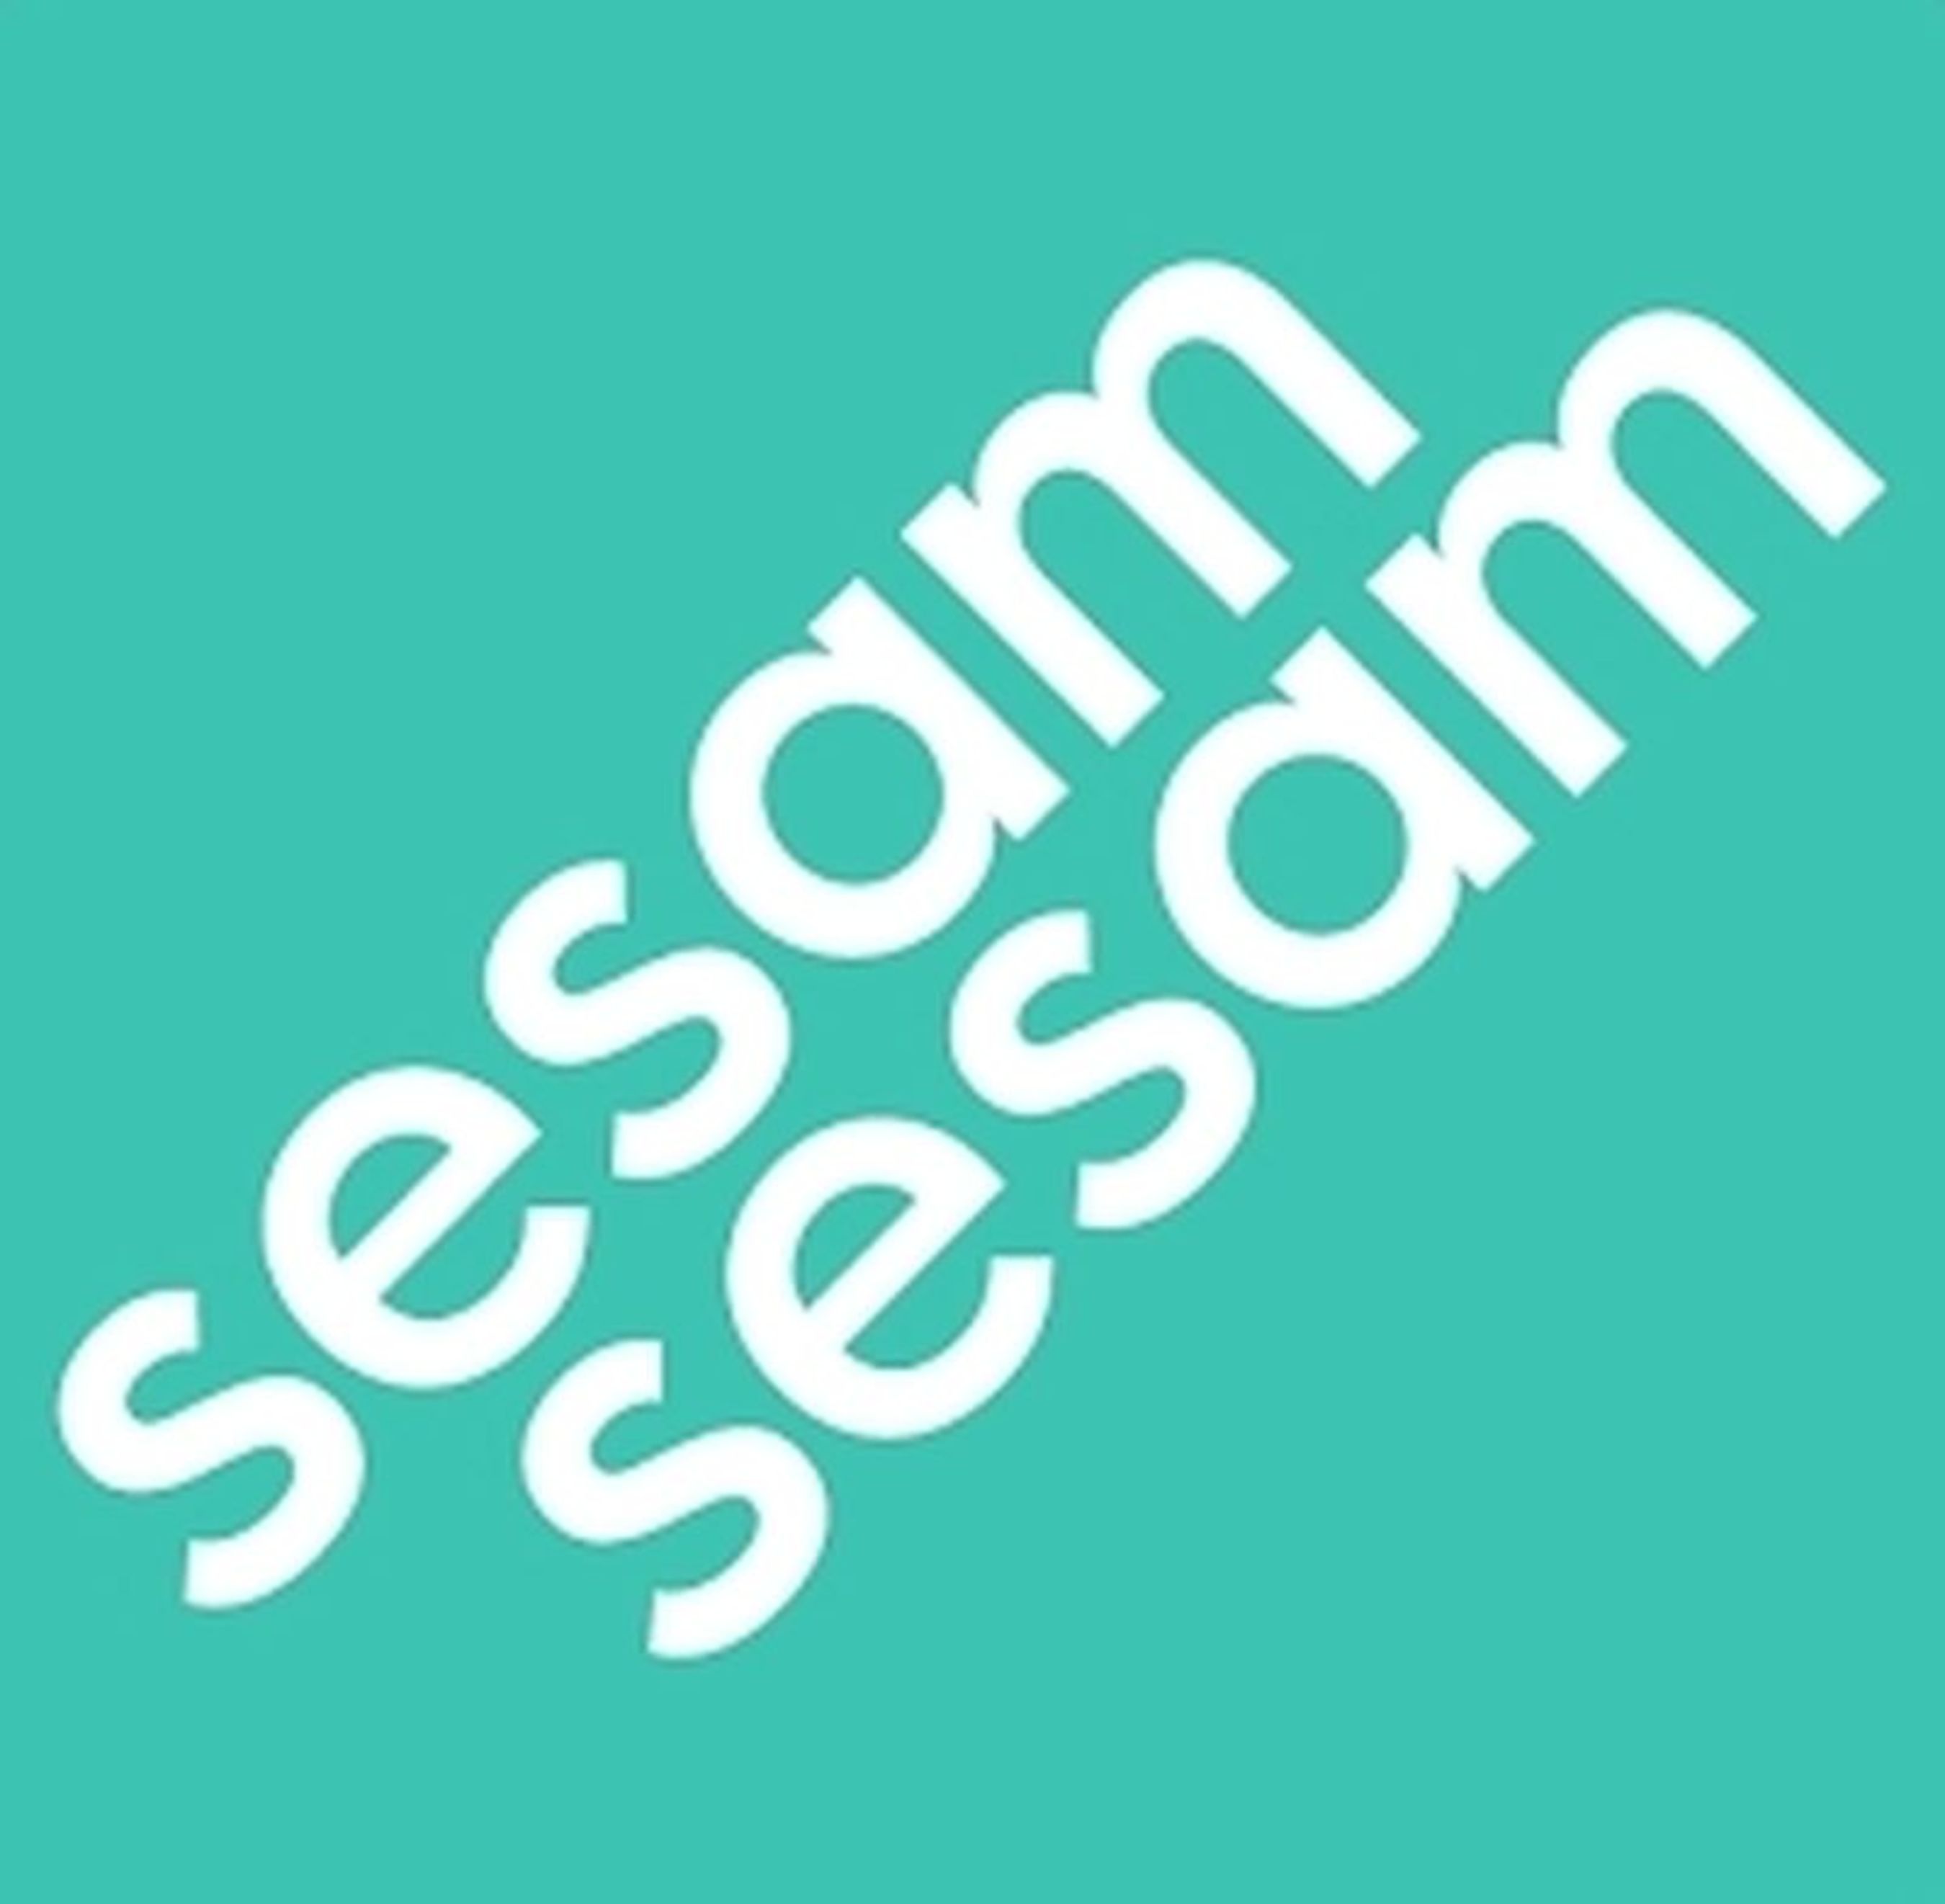 Sesam Sesam - Automagical parking (PRNewsFoto/BT Signaal)